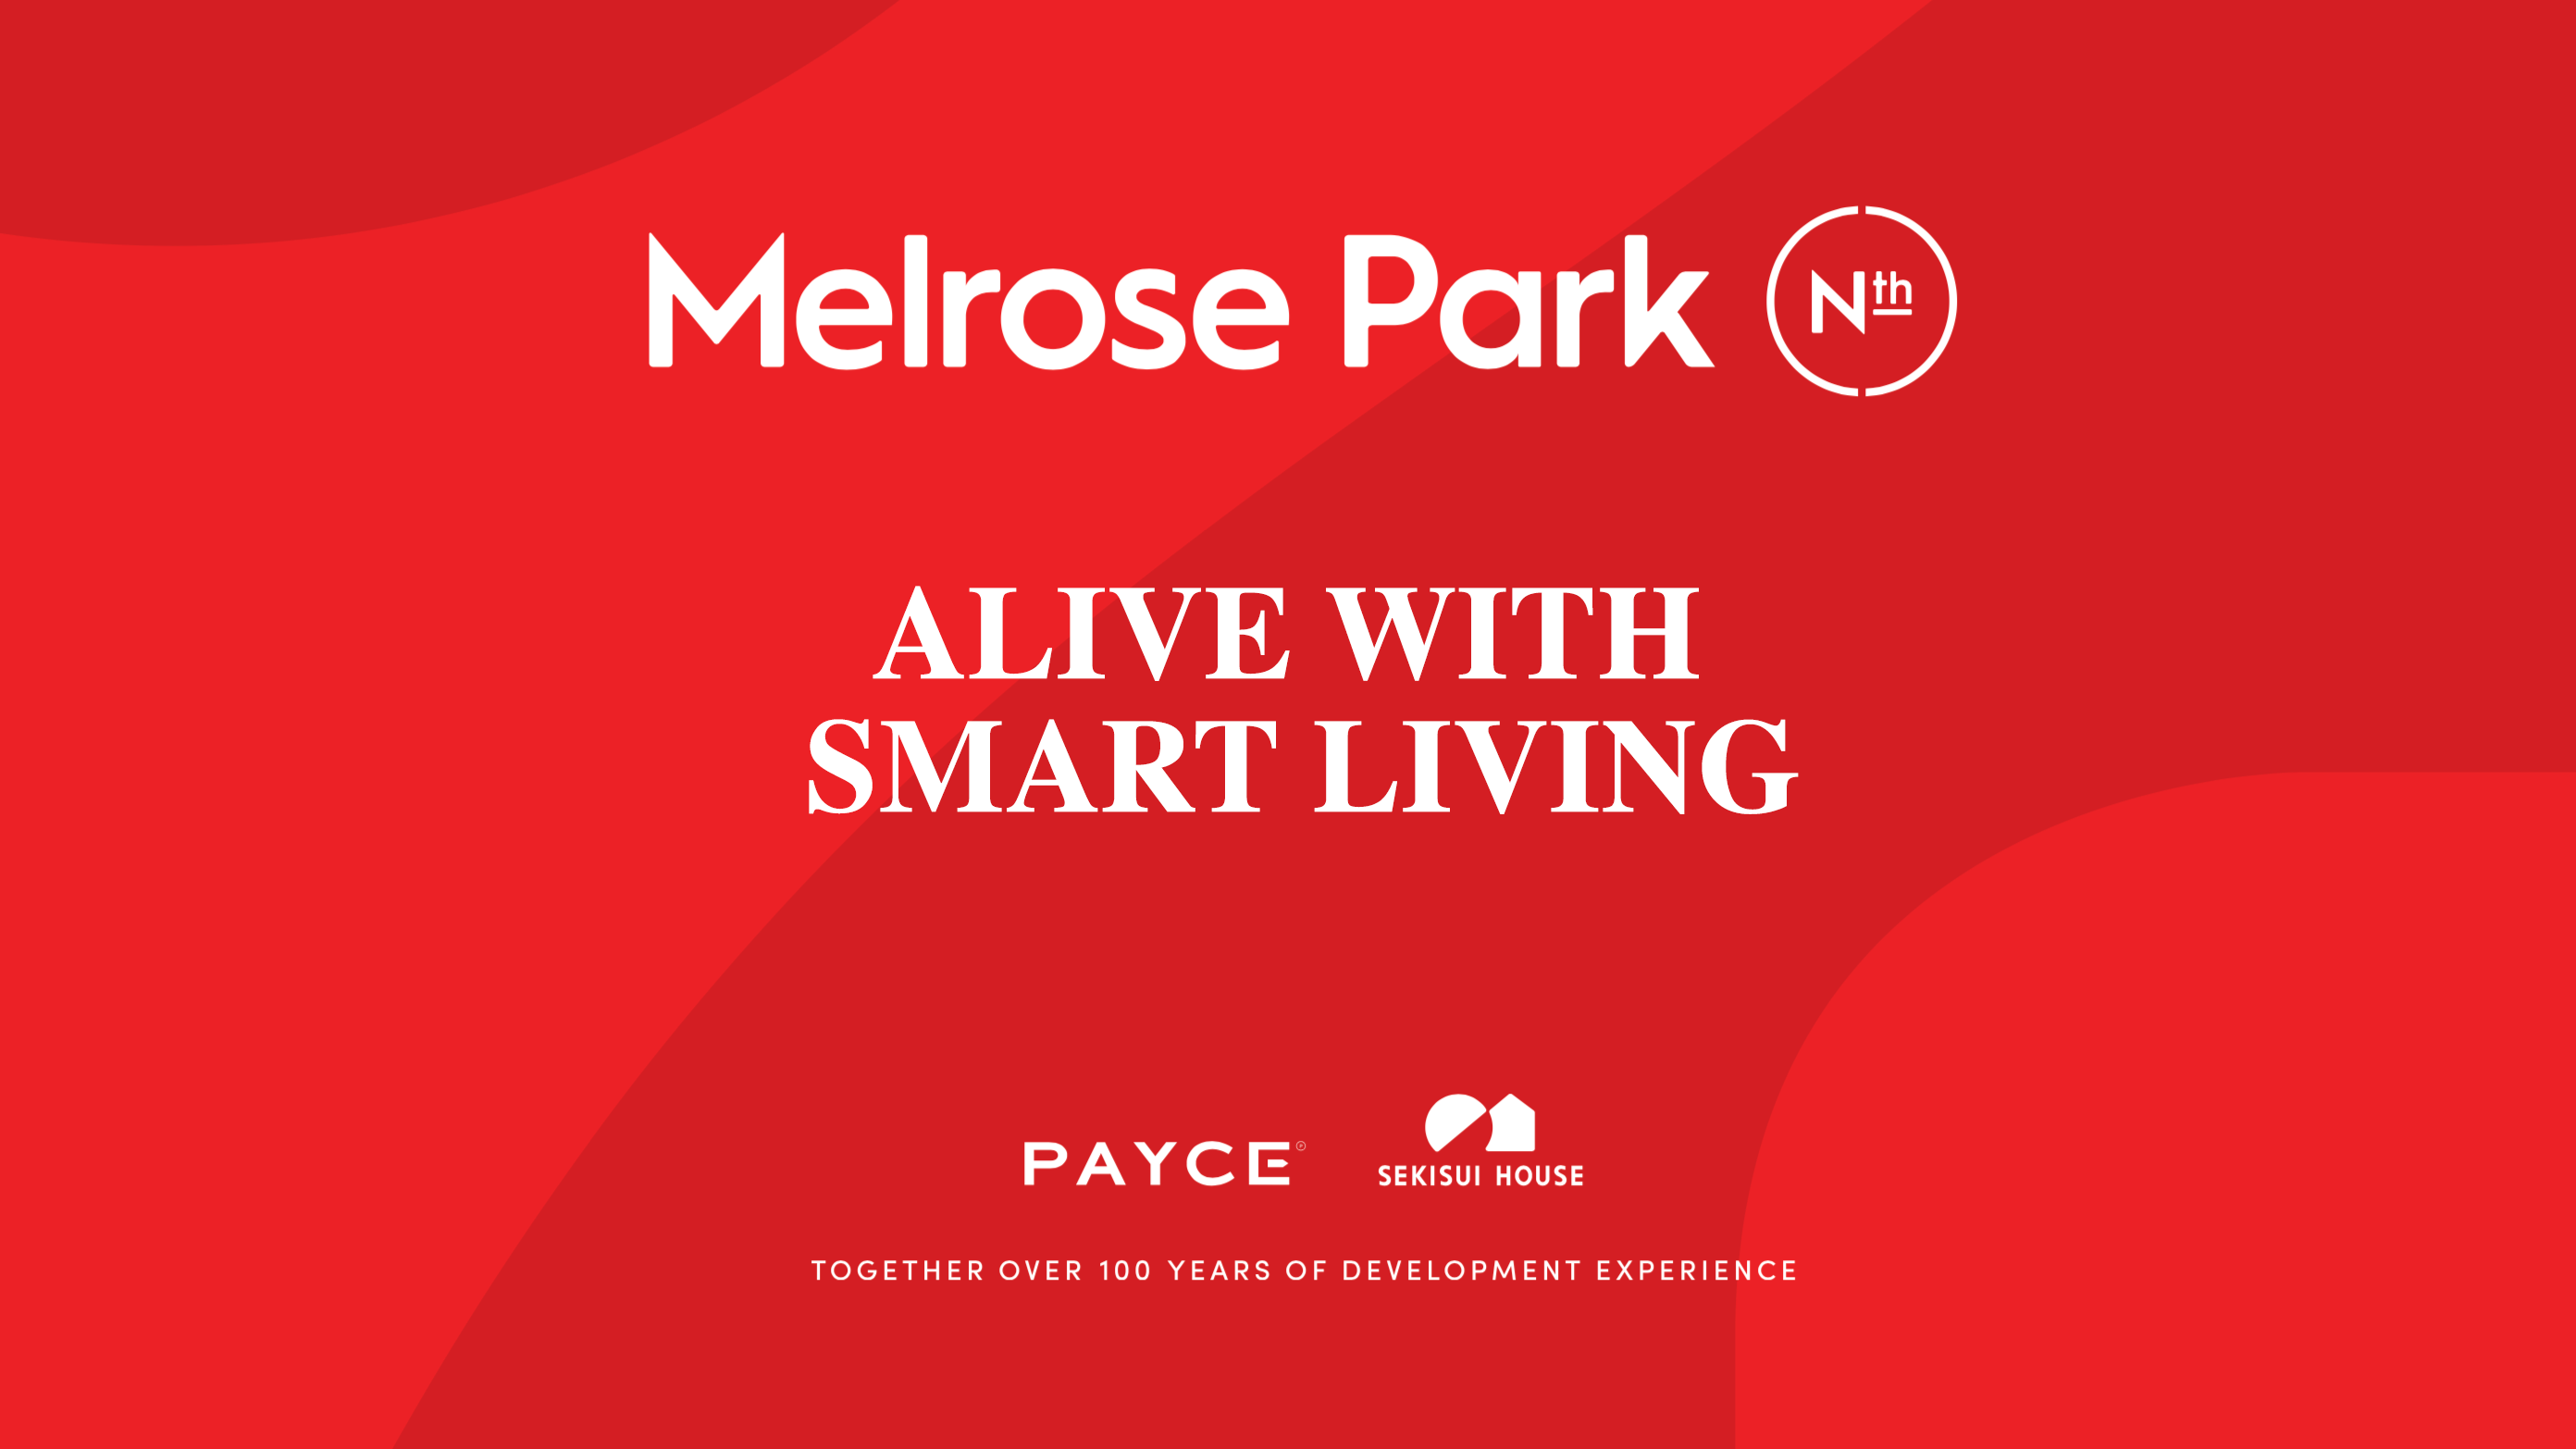 Melrose Park North ‘Alive with smart living’